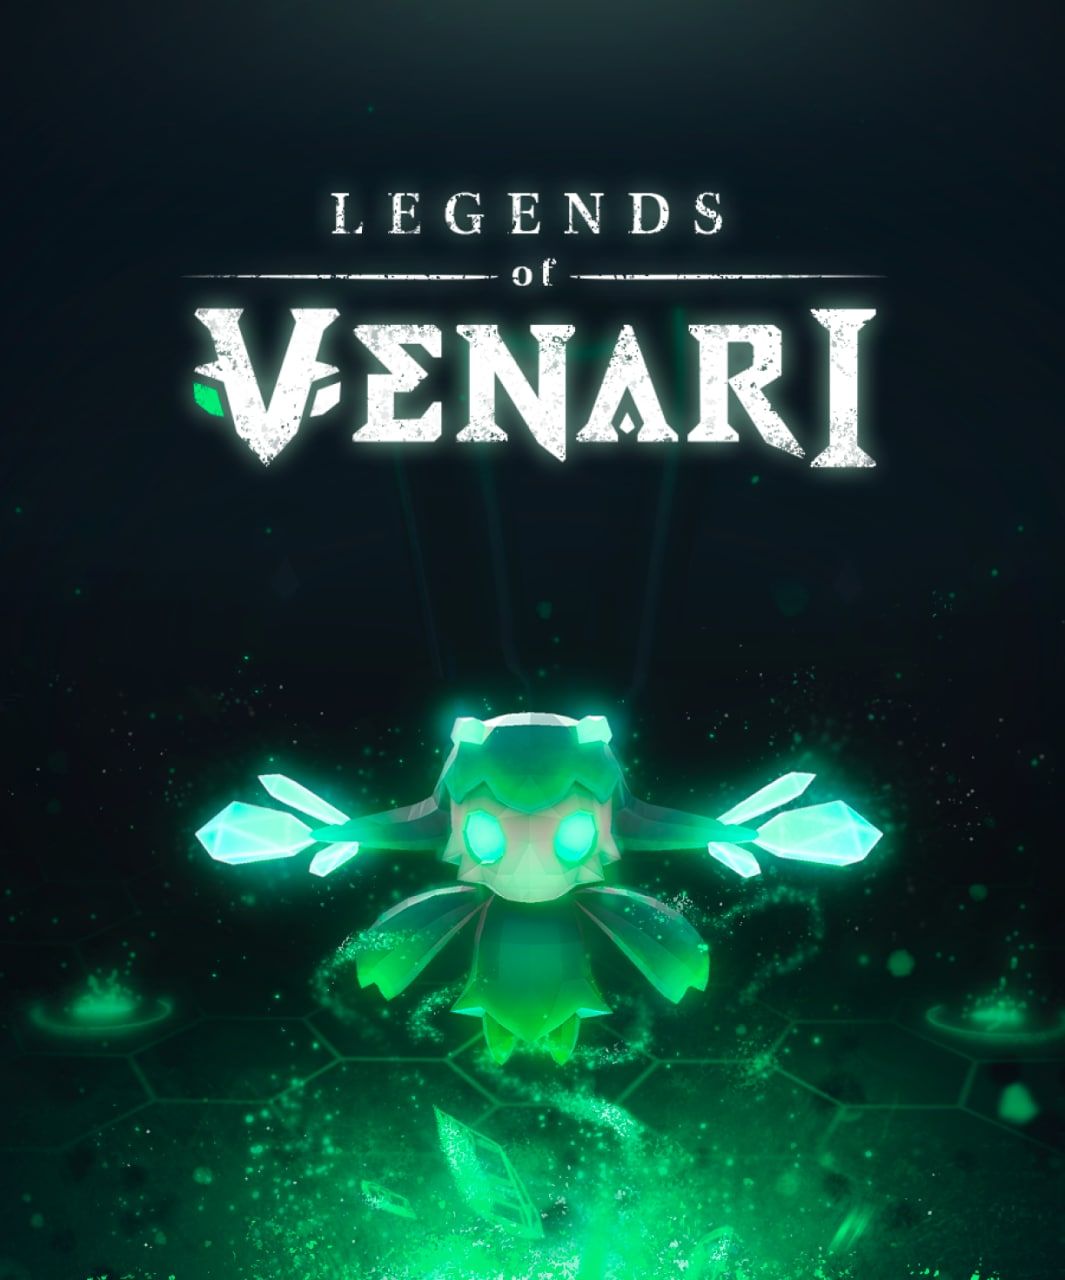 Legends of Venari Alpha Season Launching Now! - Play to Earn